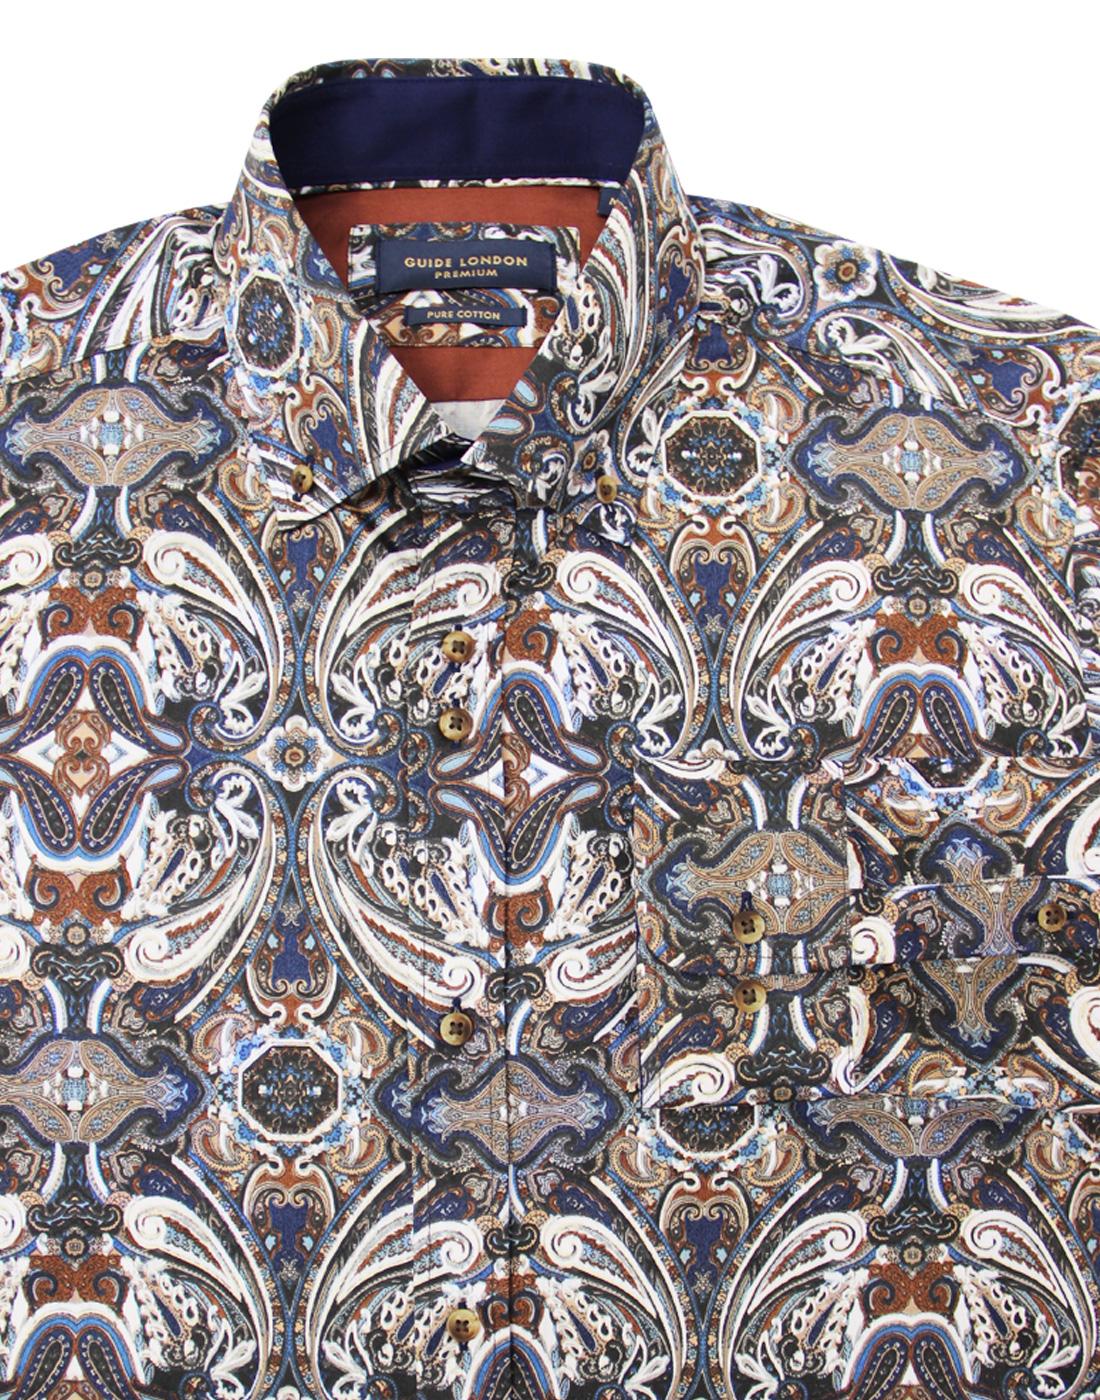 GUIDE LONDON Men's Retro 1960s Mod Ornate Paisley Shirt in Navy